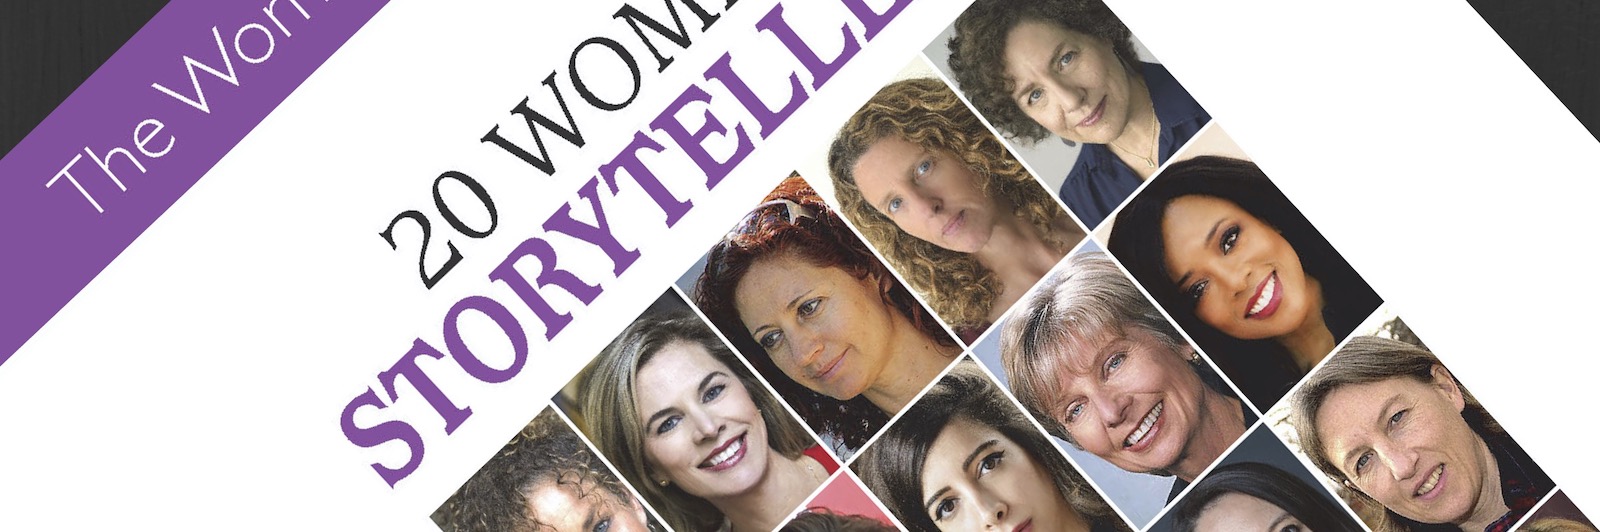 20 Women Storytellers Book | The Women's Eye Book Series Co-editors Pamela Burke and Patricia Caso